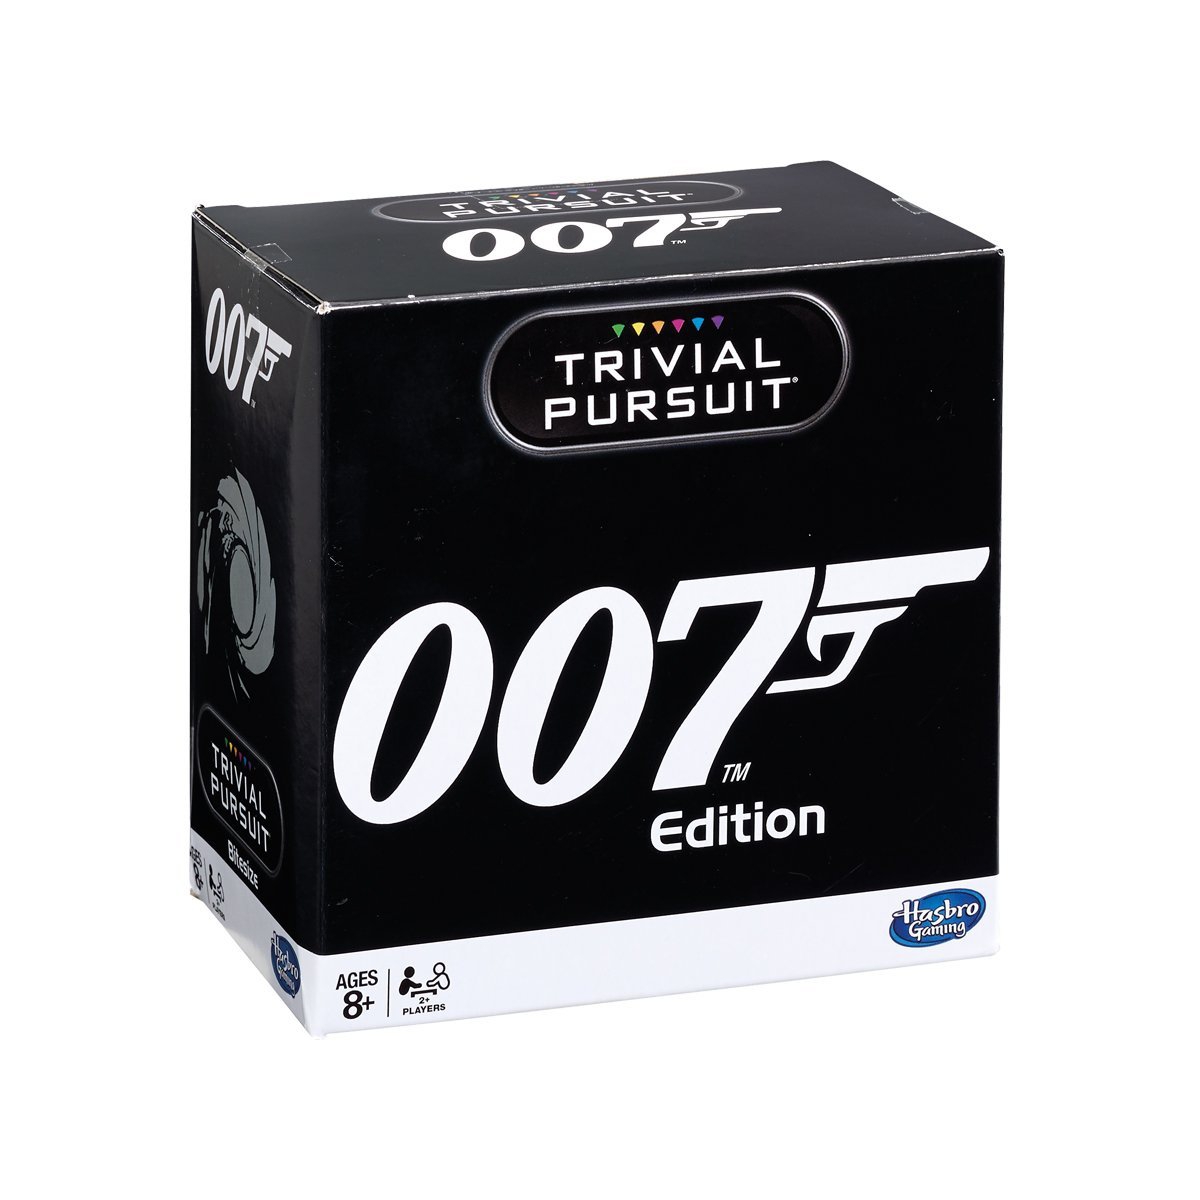 James Bond 007 'Trivial Pursuit' Card Game